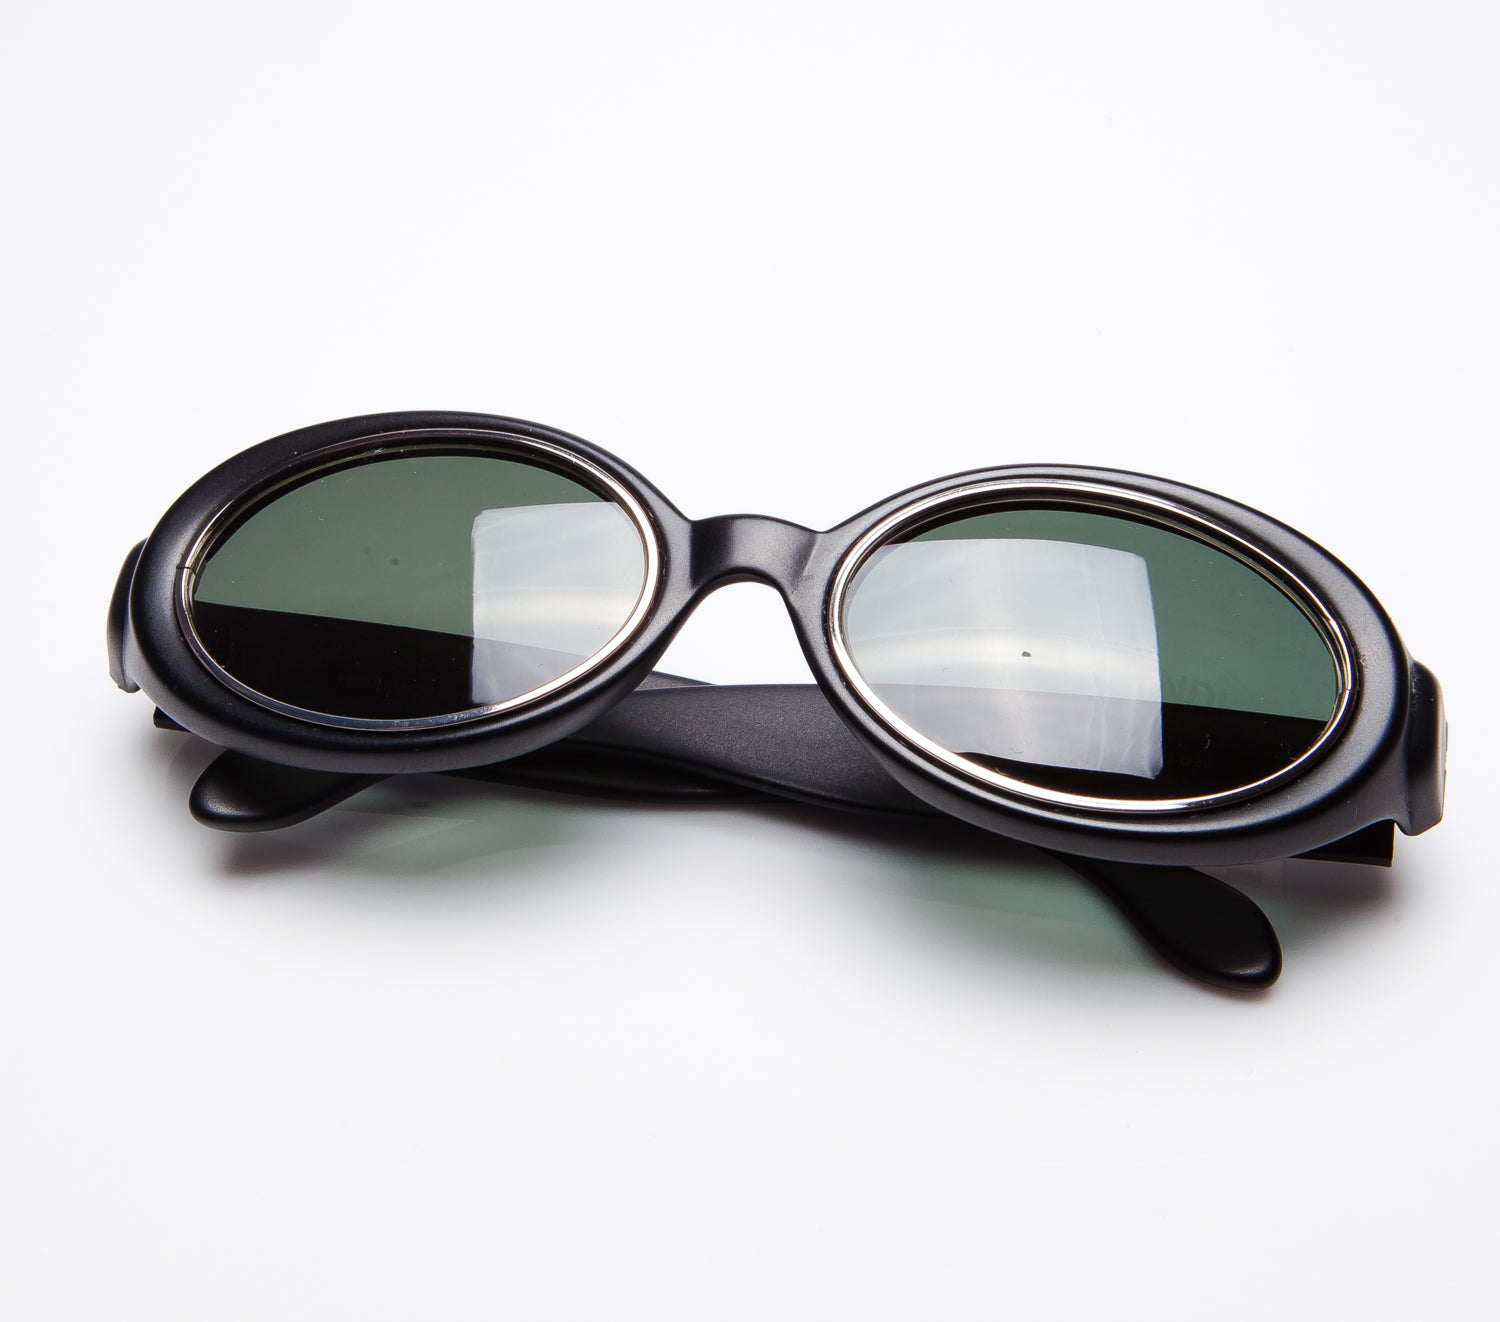 🕶️ ZFYCOL Vintage Sunglasses - Unveil the Timeless Elegance! 🕶️